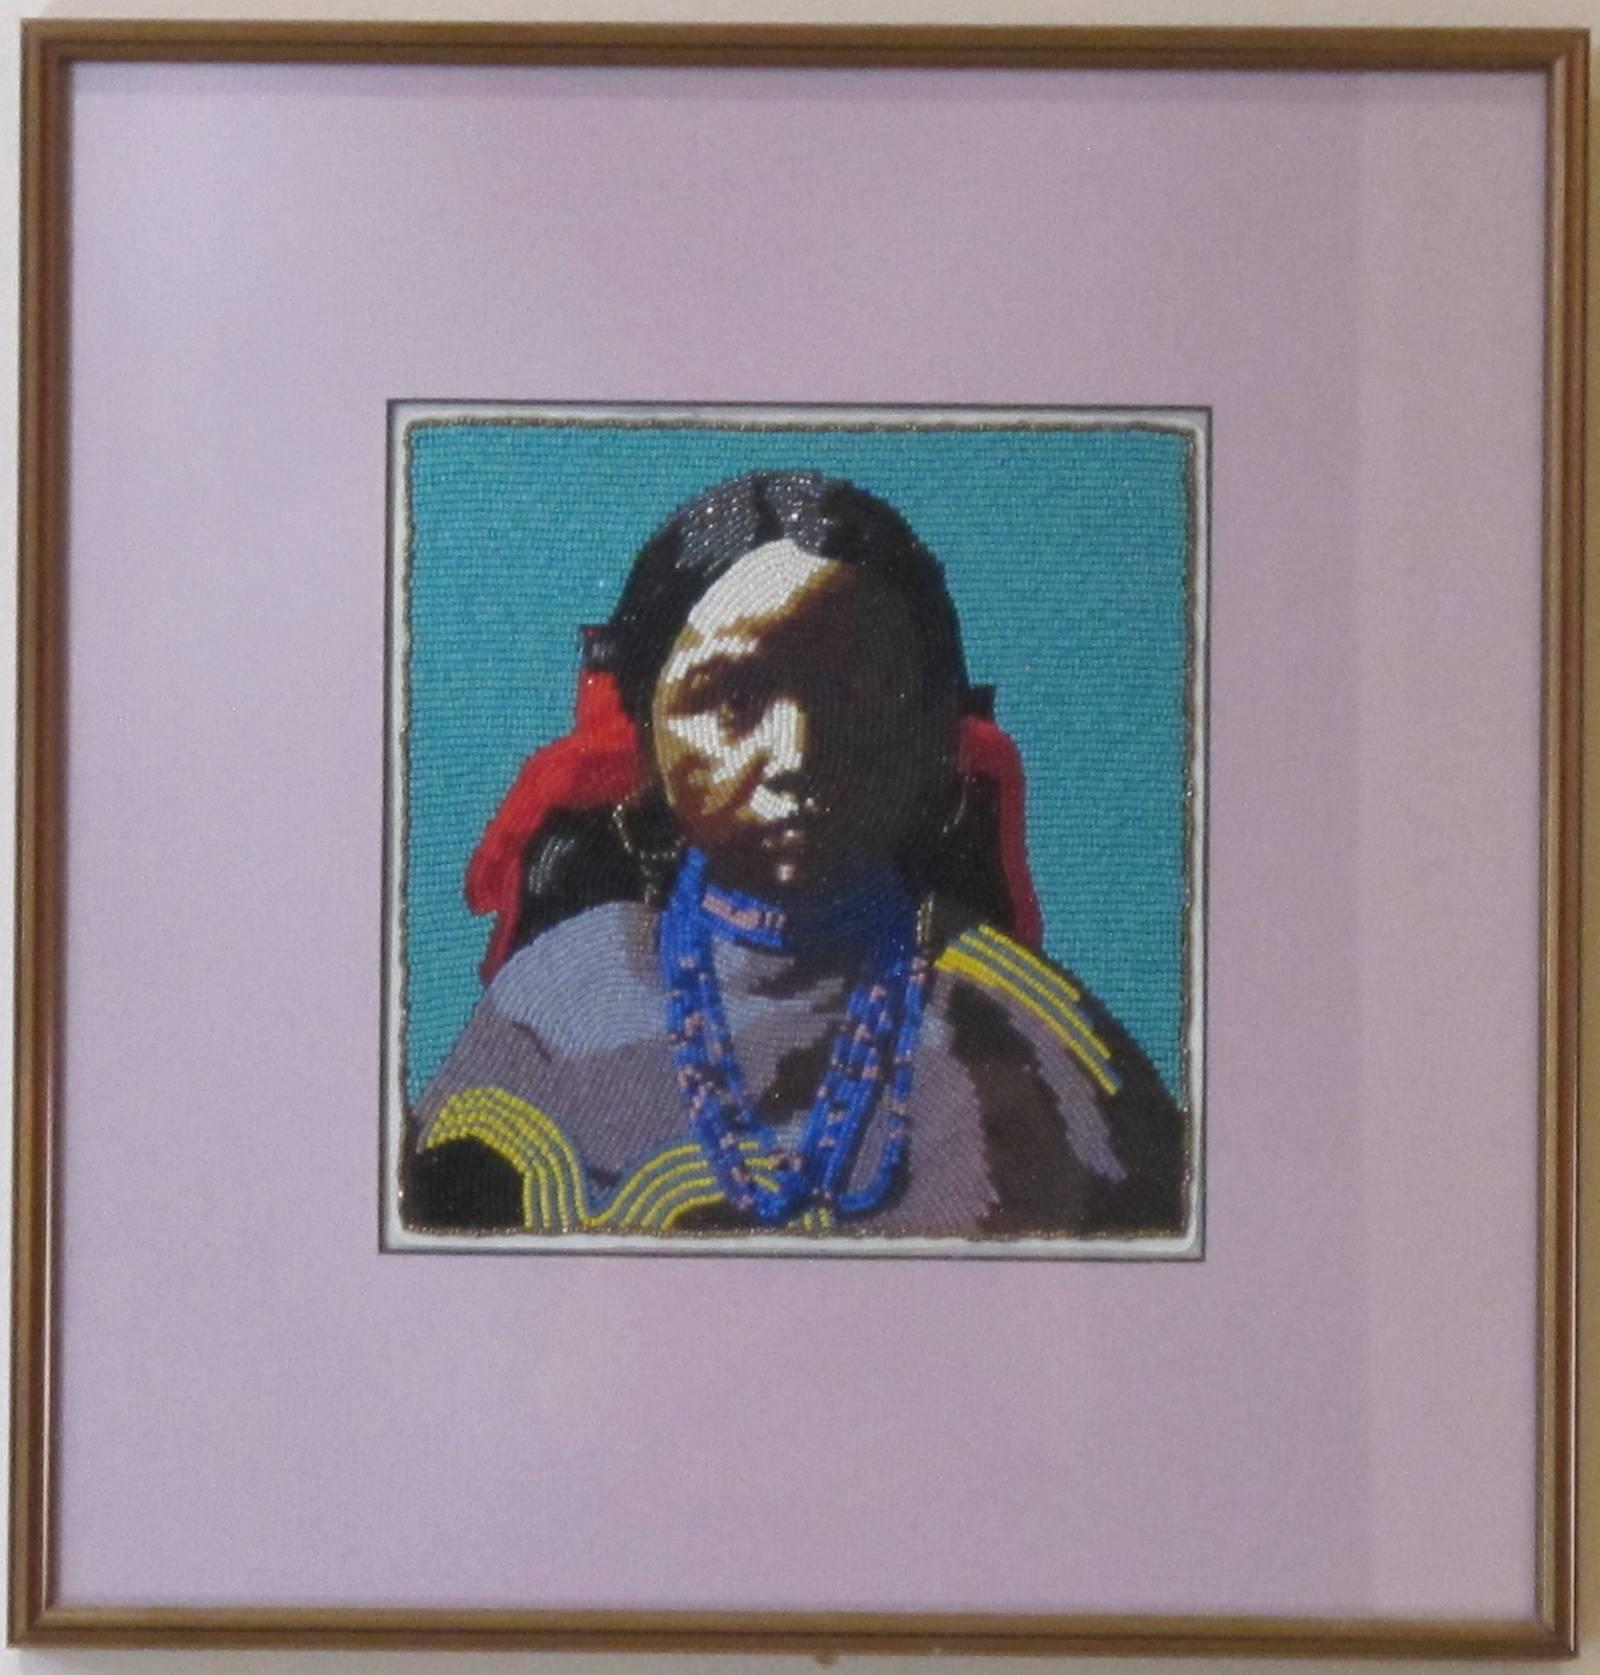 Jicarilla Girl, beaded portrait of Native American girl - Painting by Marcus Amerman